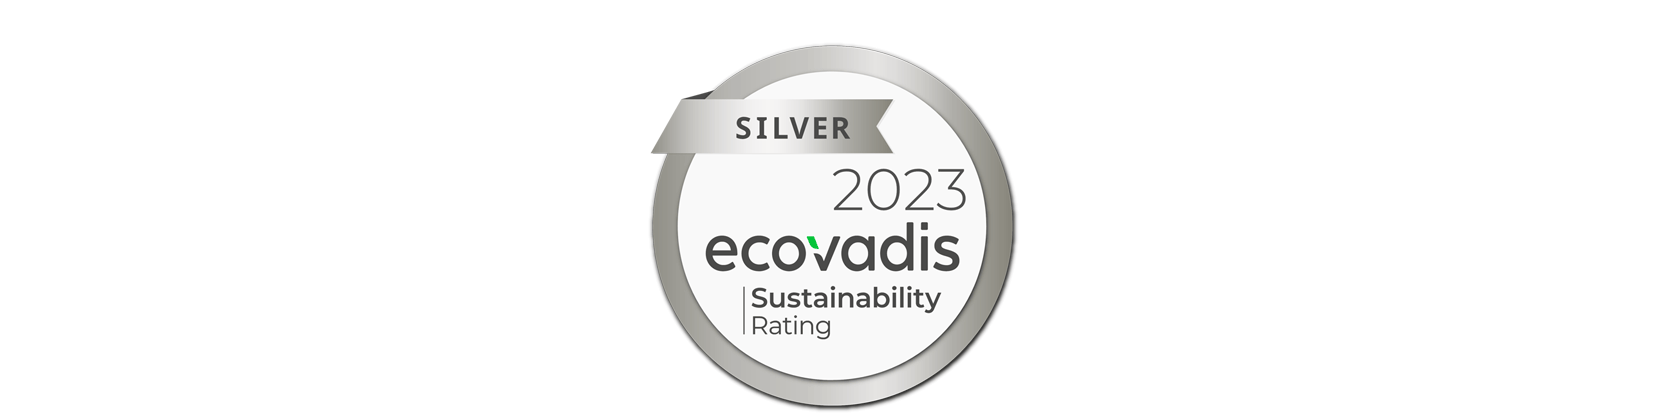 score_ecovadis_haulotte_sustainability_rating_2023_silver_argent